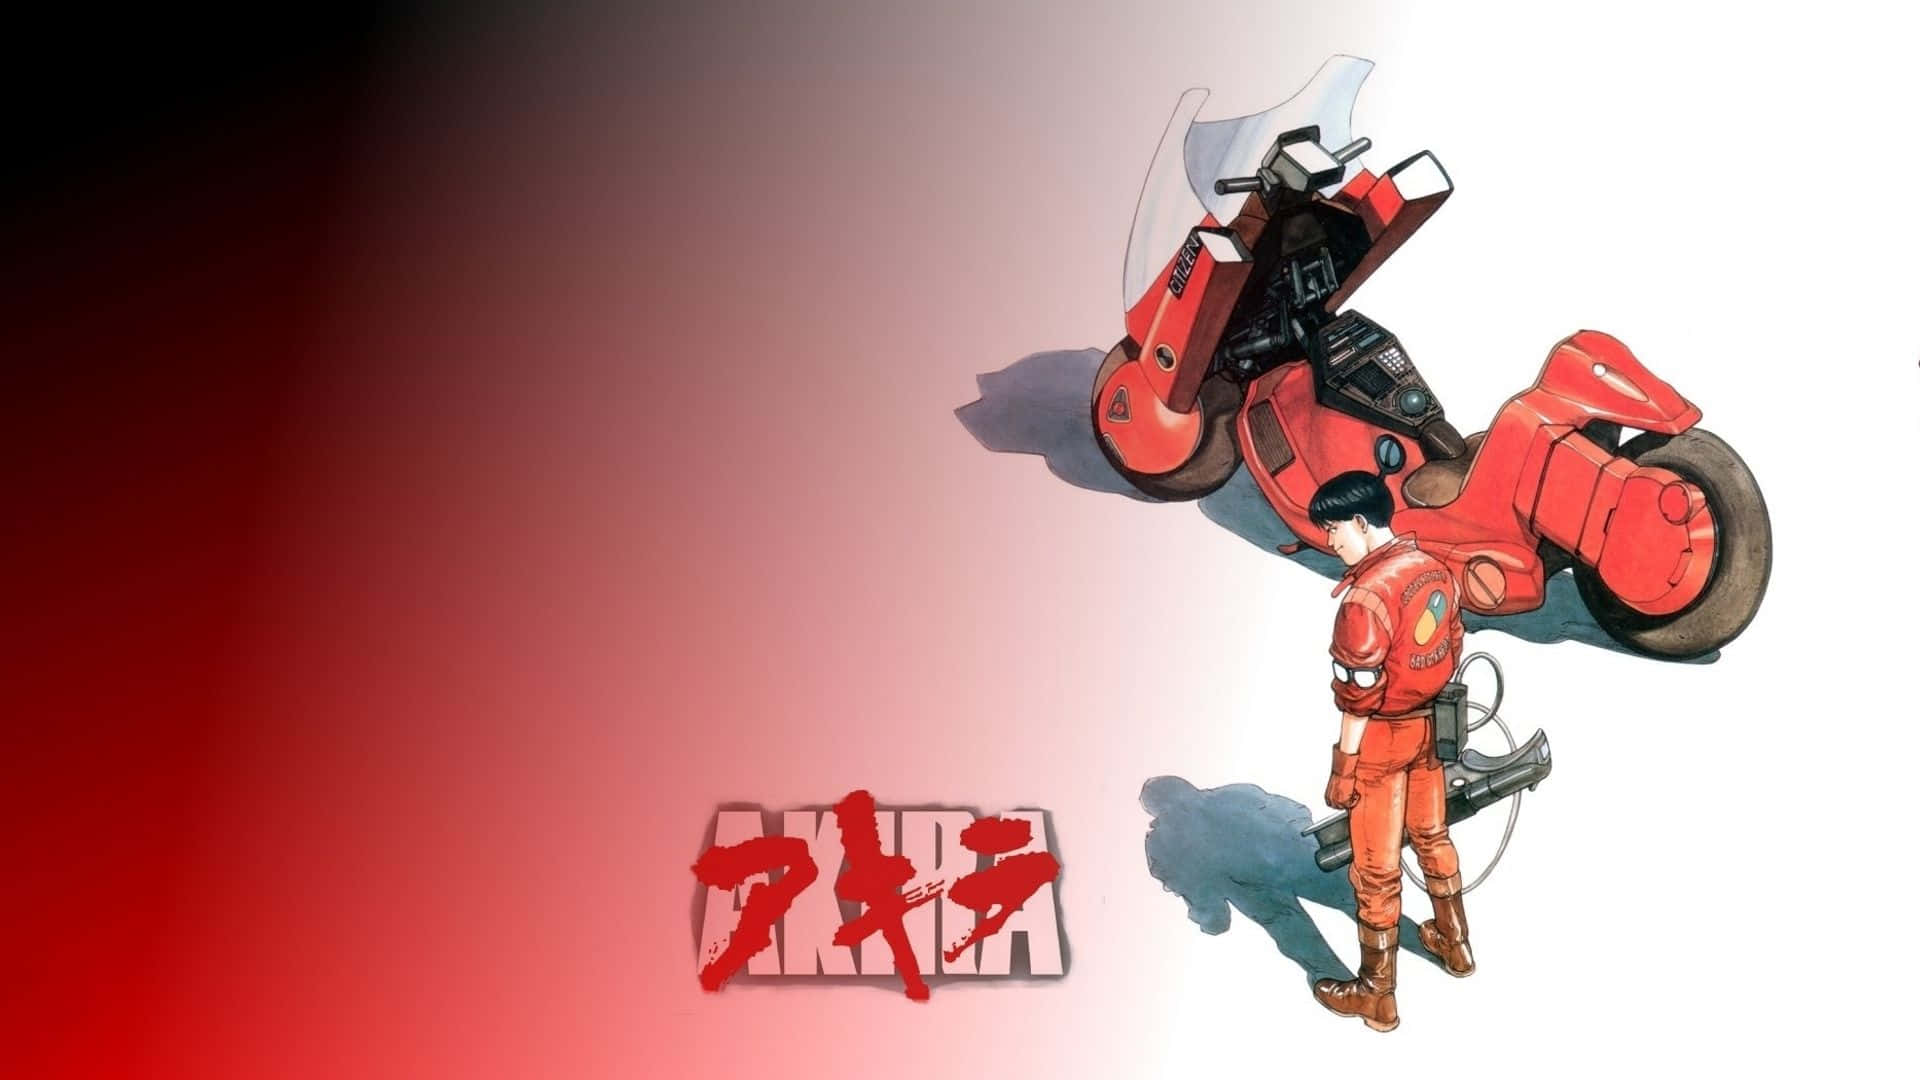 Shotaro Kaneda Riding His Motorcycle In Cyberpunk City Wallpaper